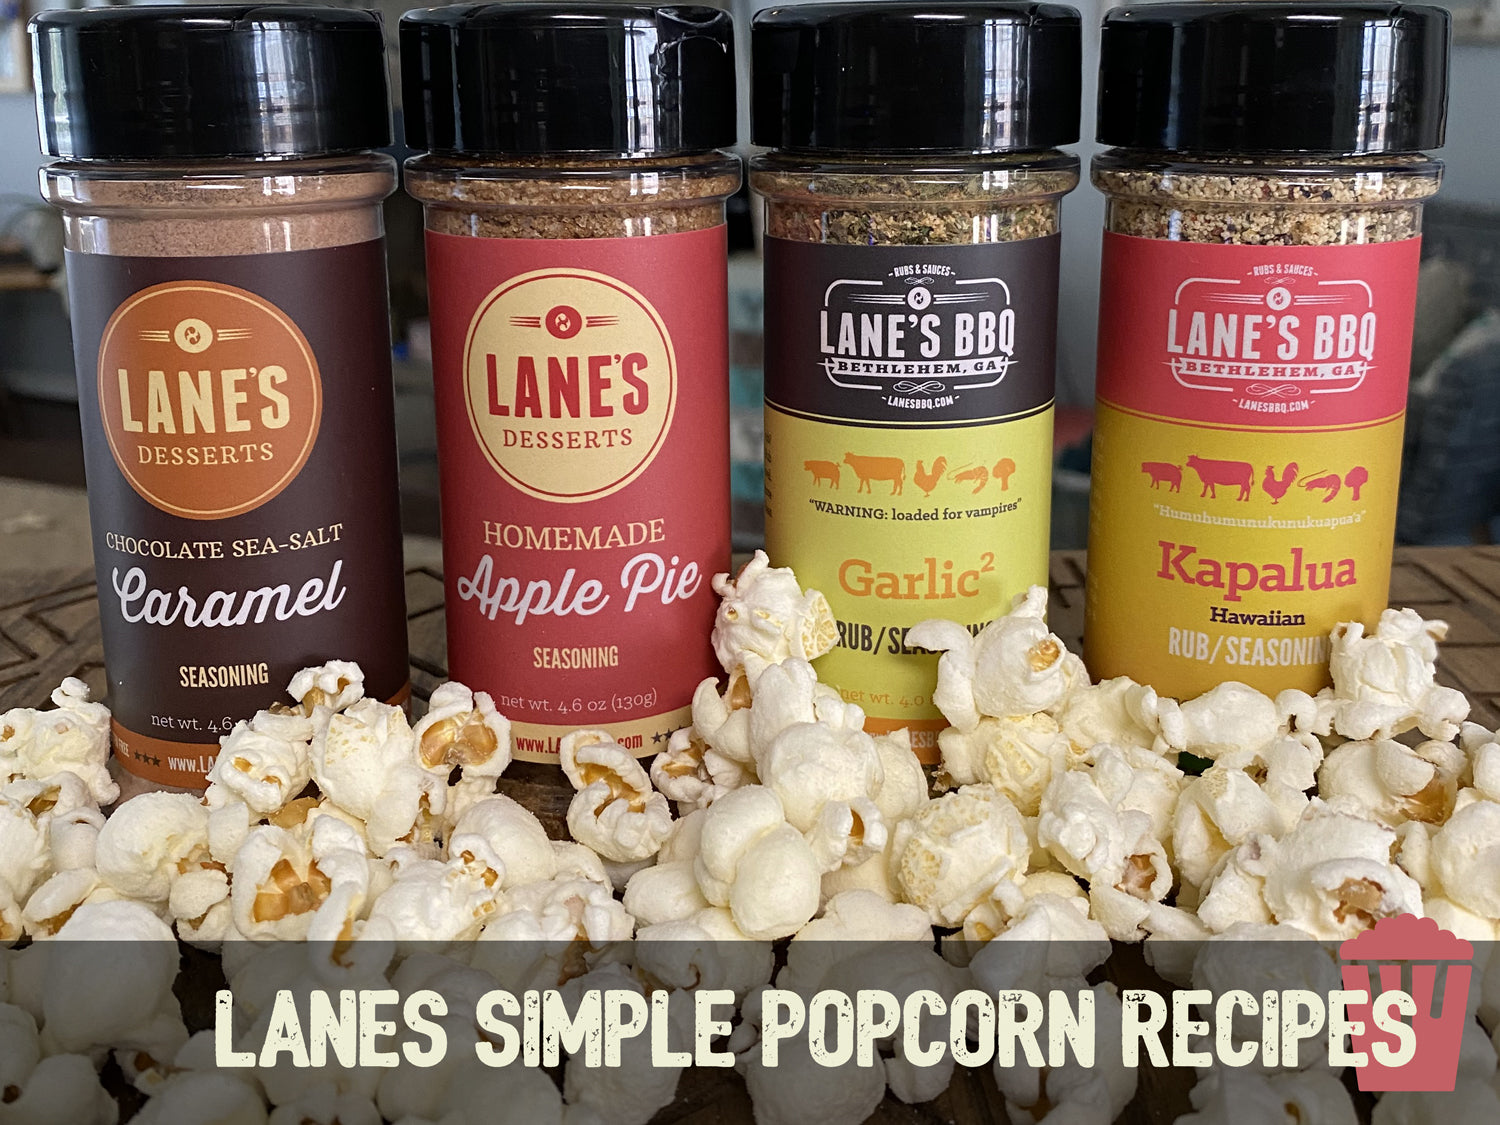 How to flavor your Popcorn using Lane's Seasonings